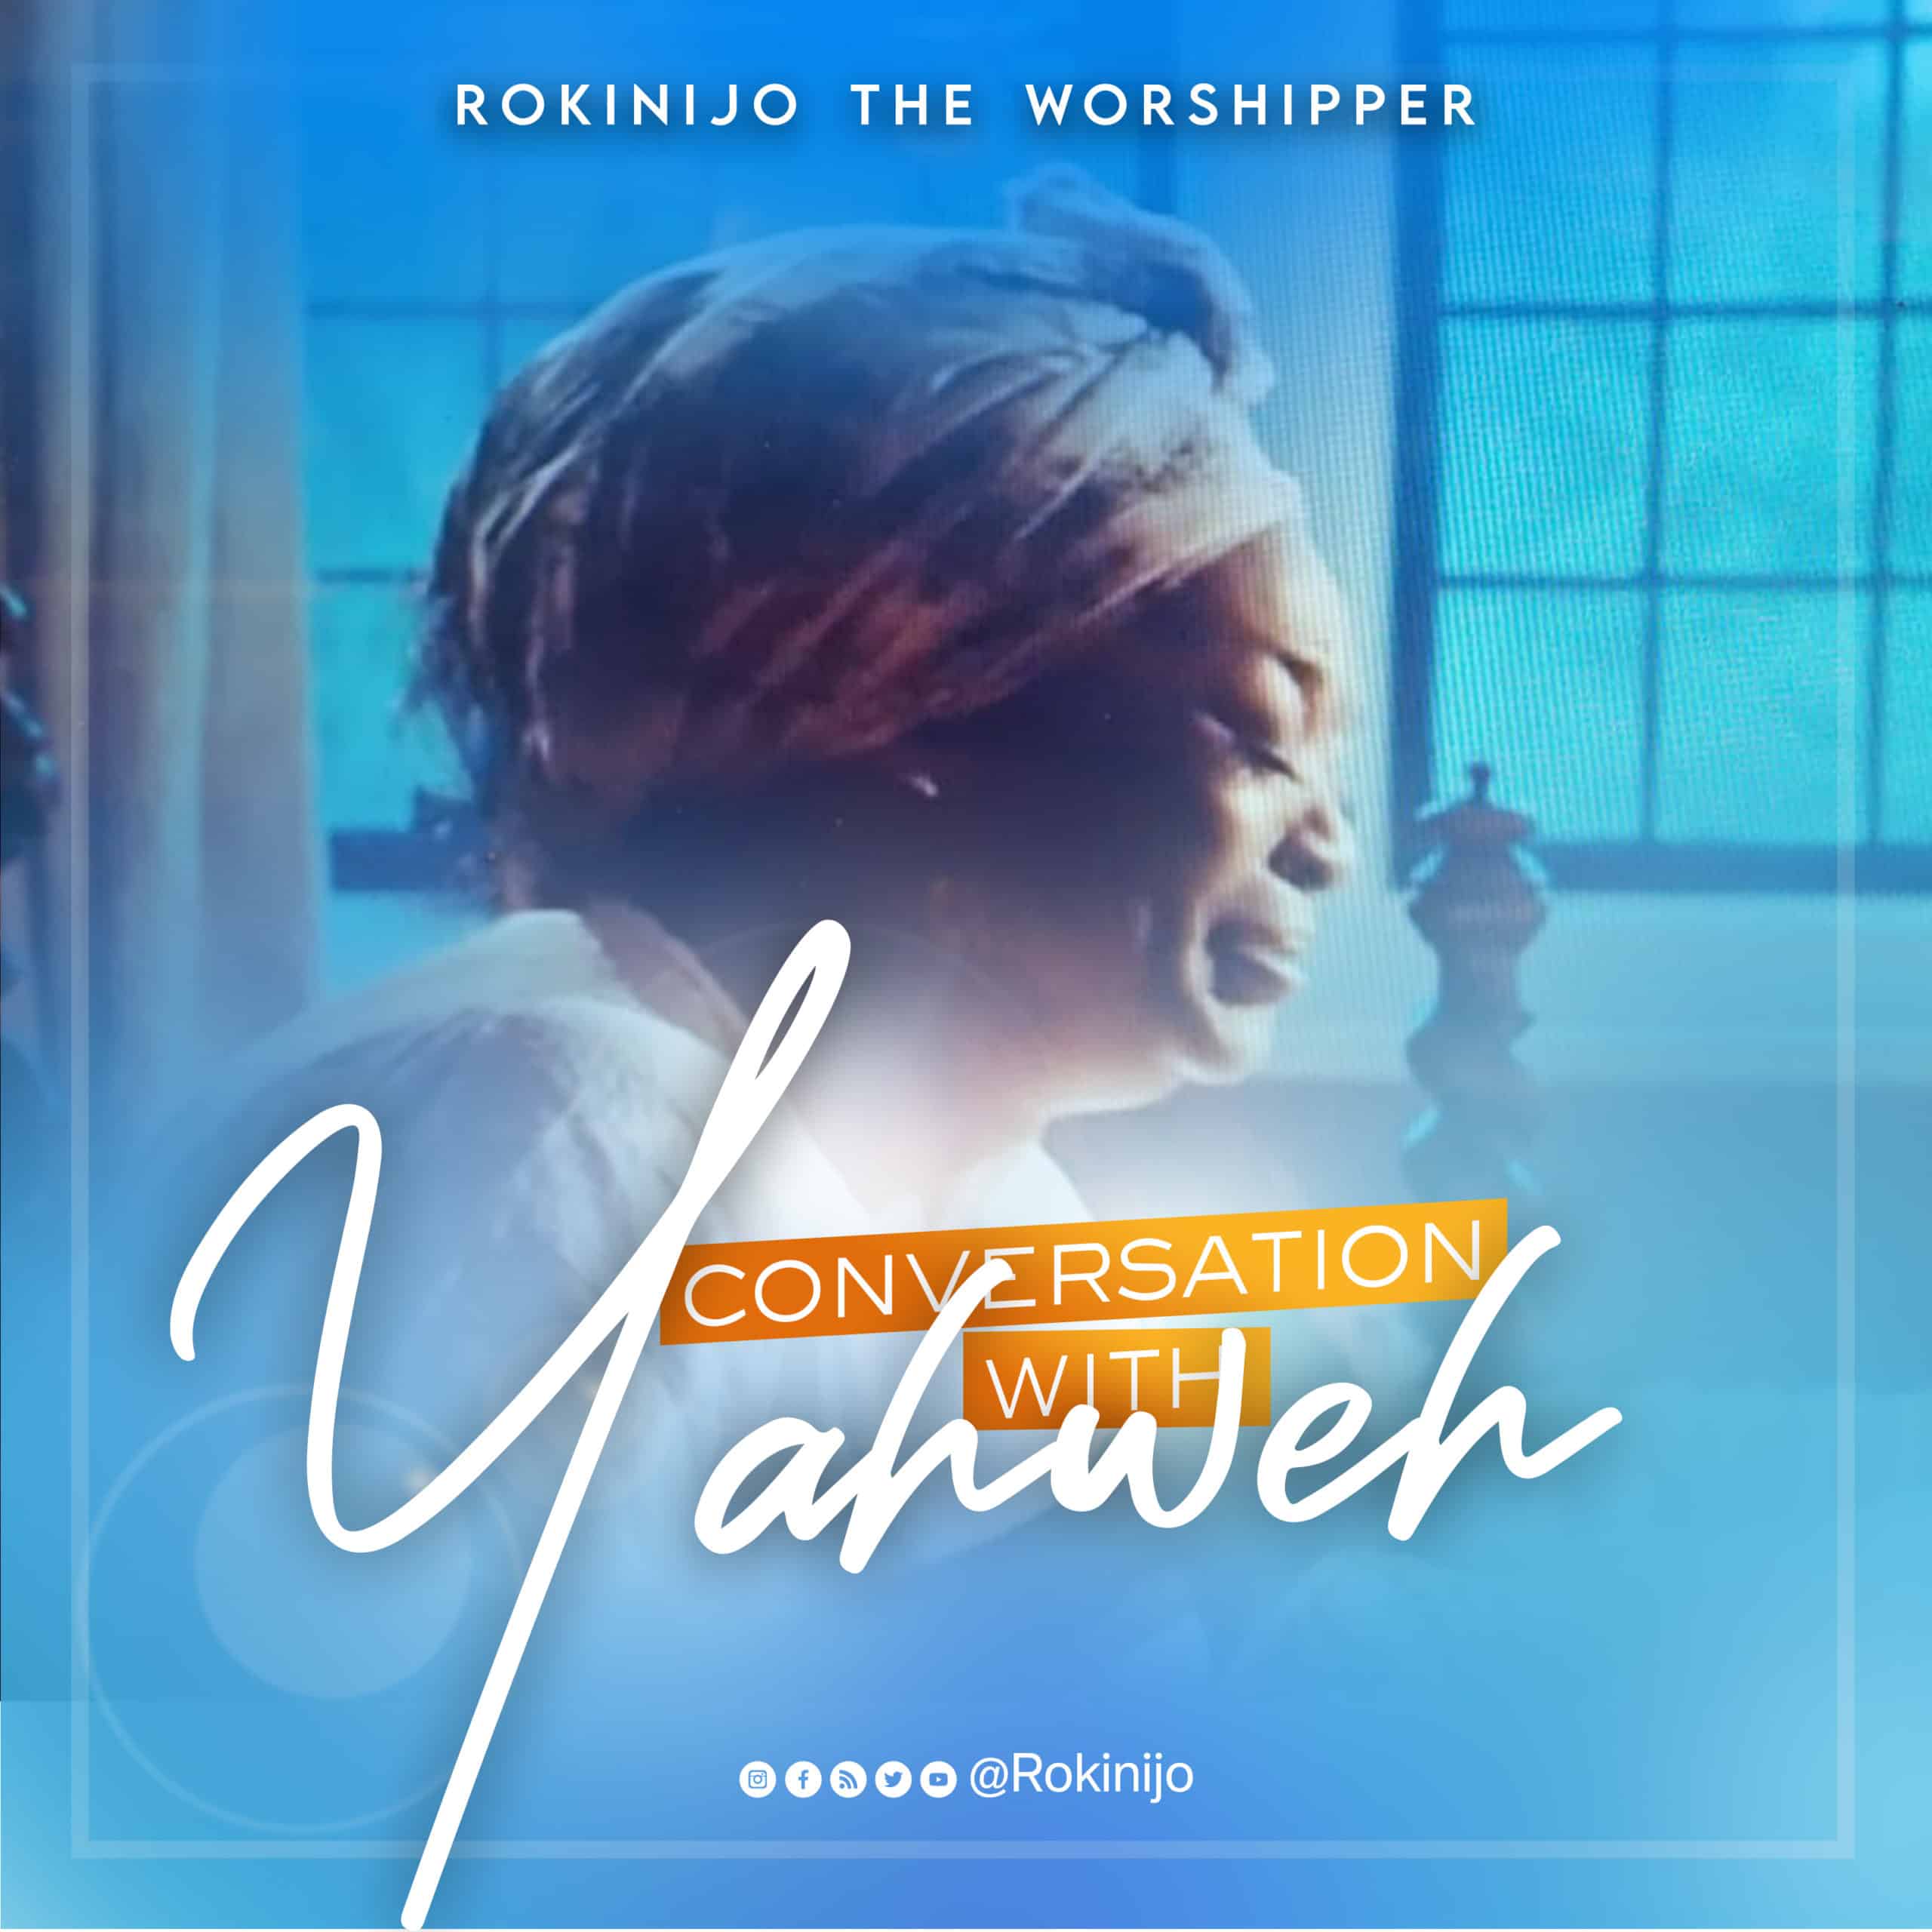 Rokinijo The Worshipper Conversation With Yahweh